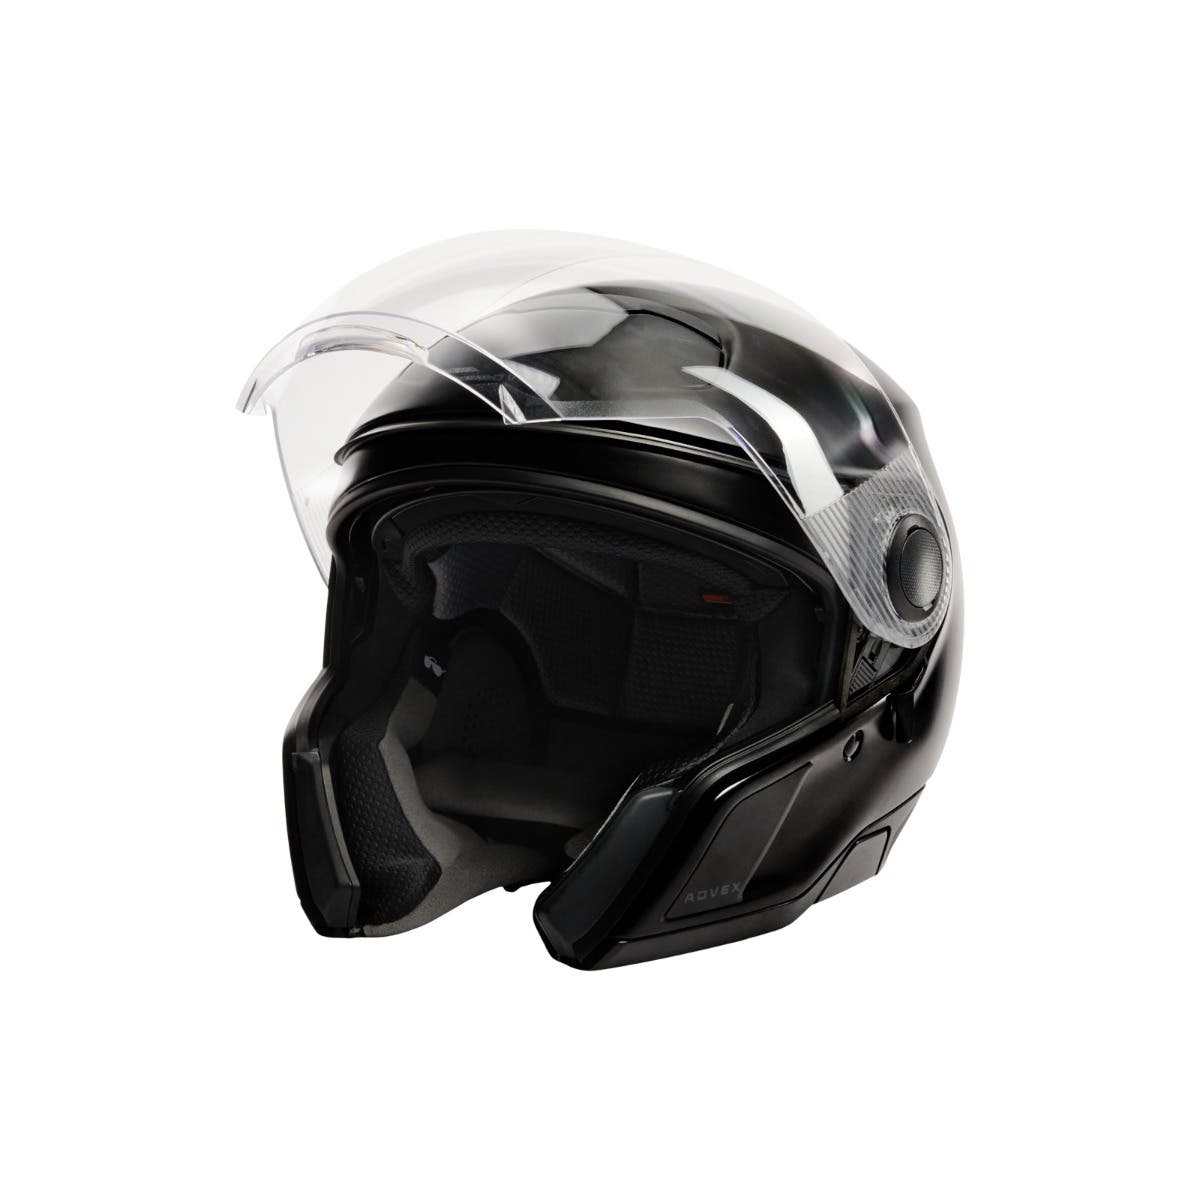 Advex Jet Helmet (DOT/ECE)